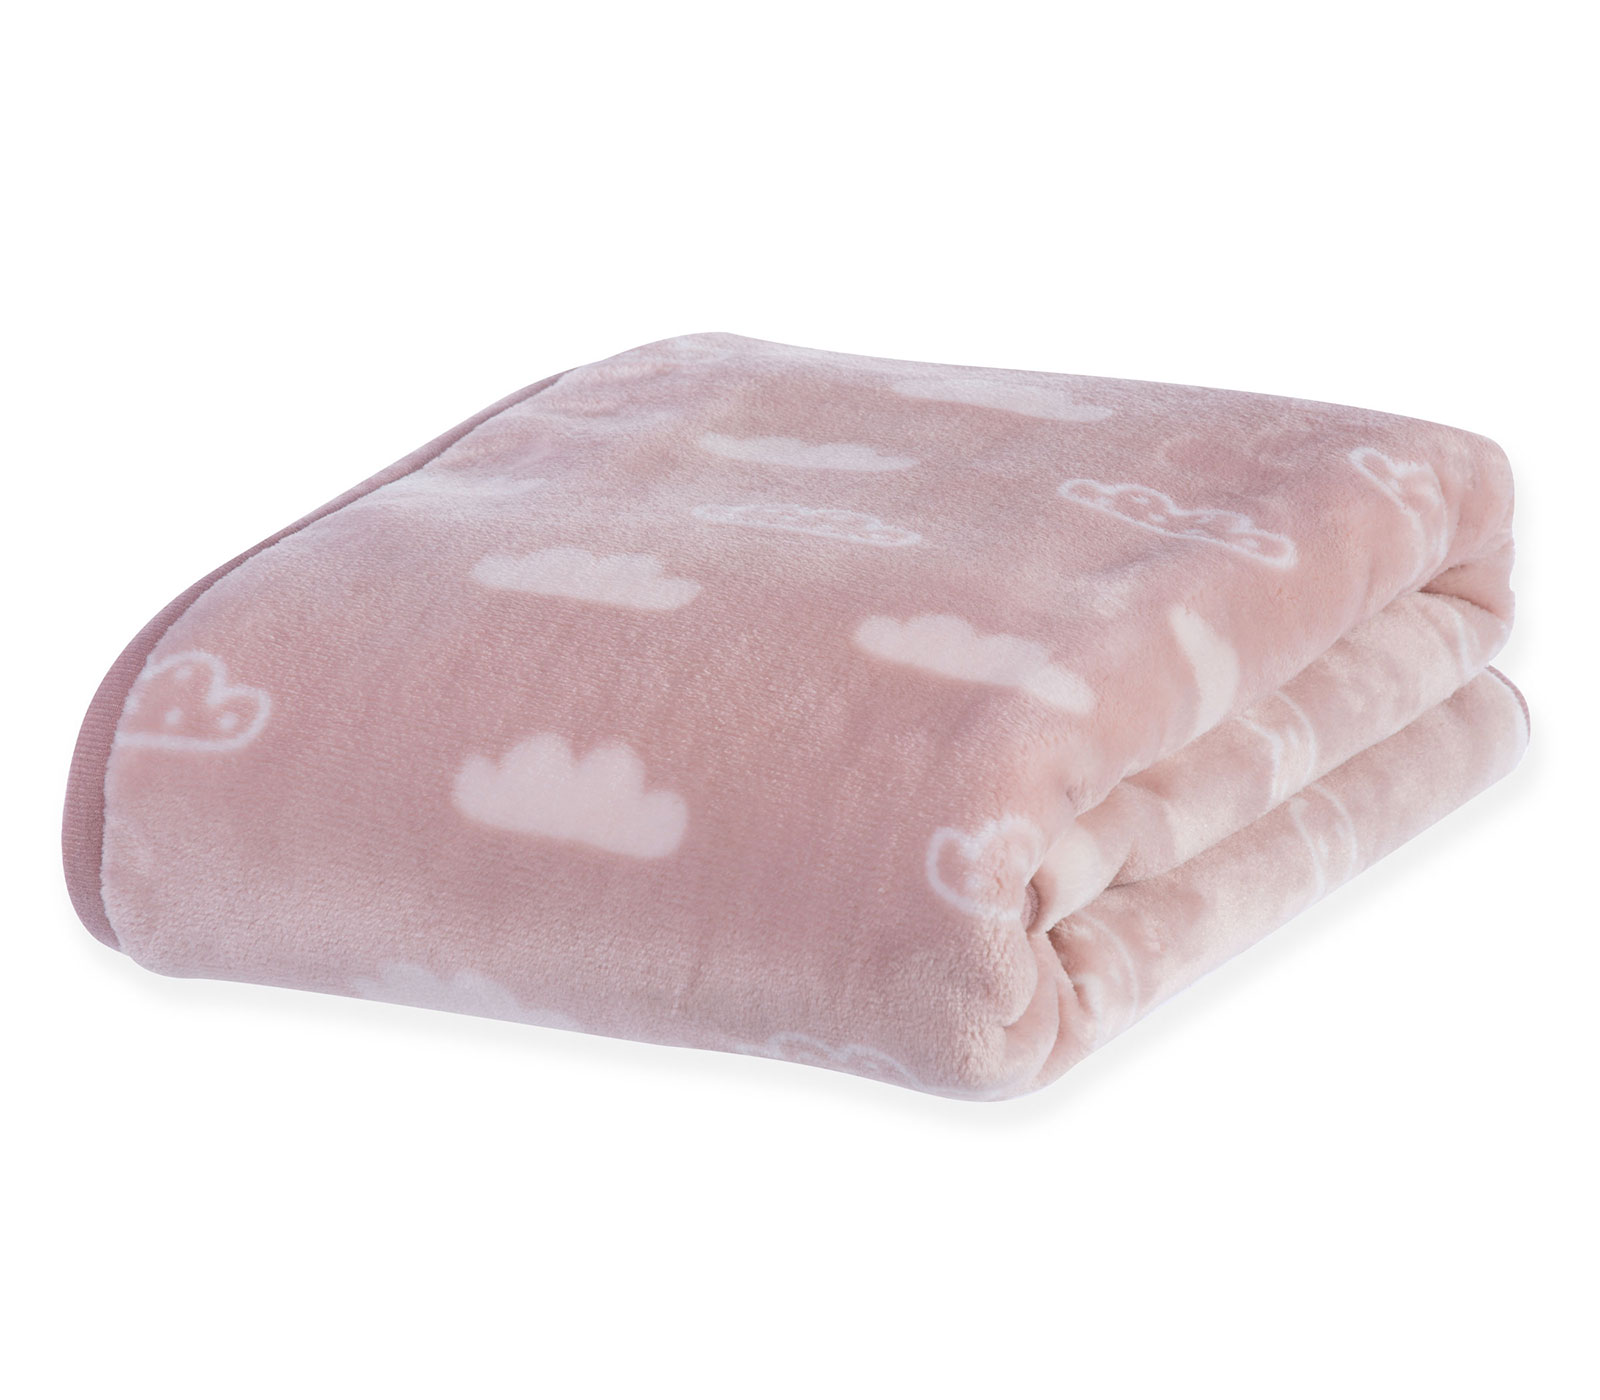 Bρεφική Κουβέρτα Κούνιας Nef-Nef Clouds 100X140 Pink